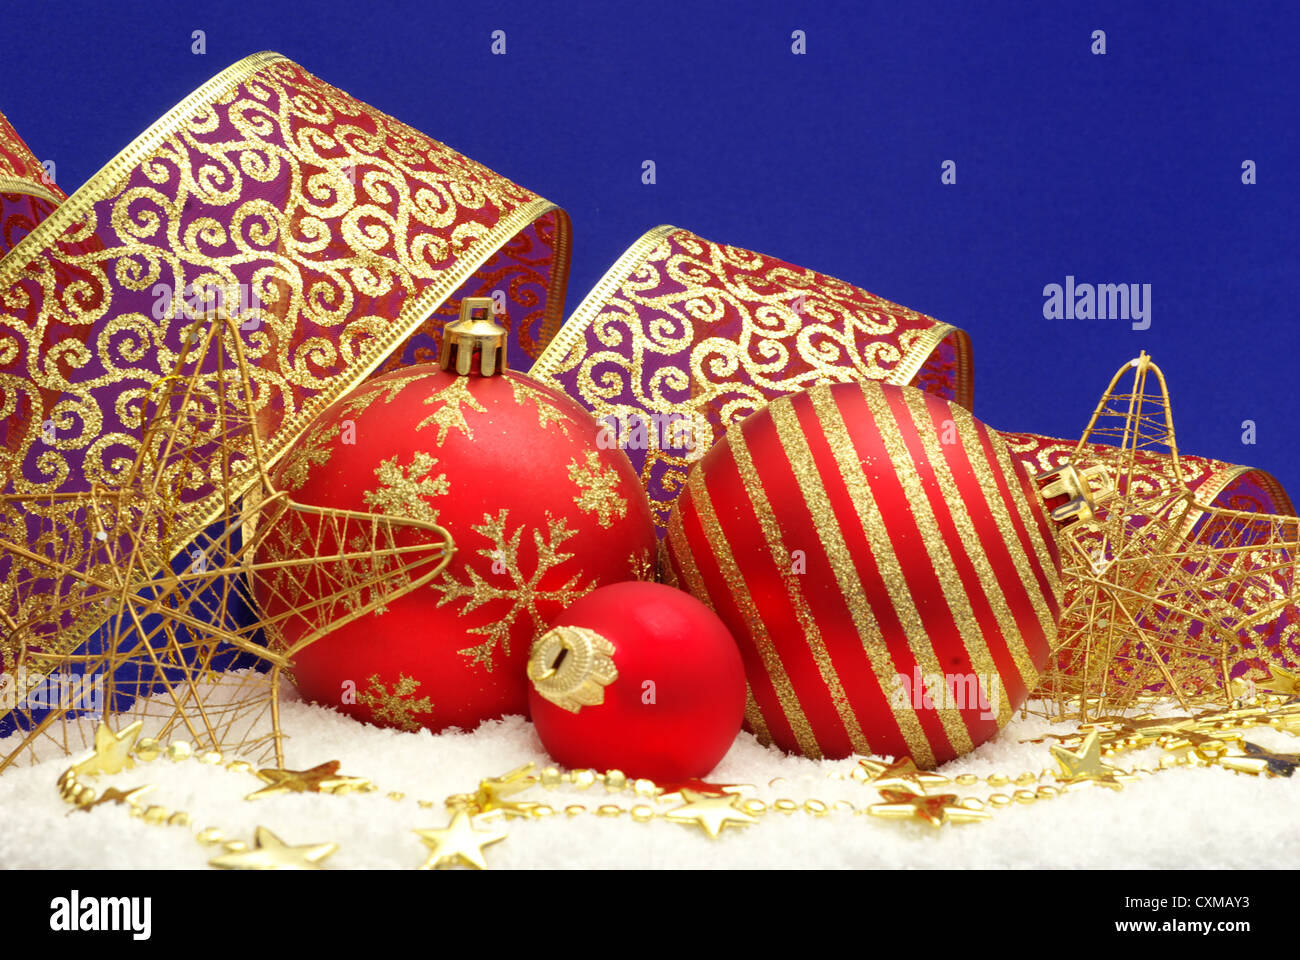 Christmas decoration over blue background Stock Photo